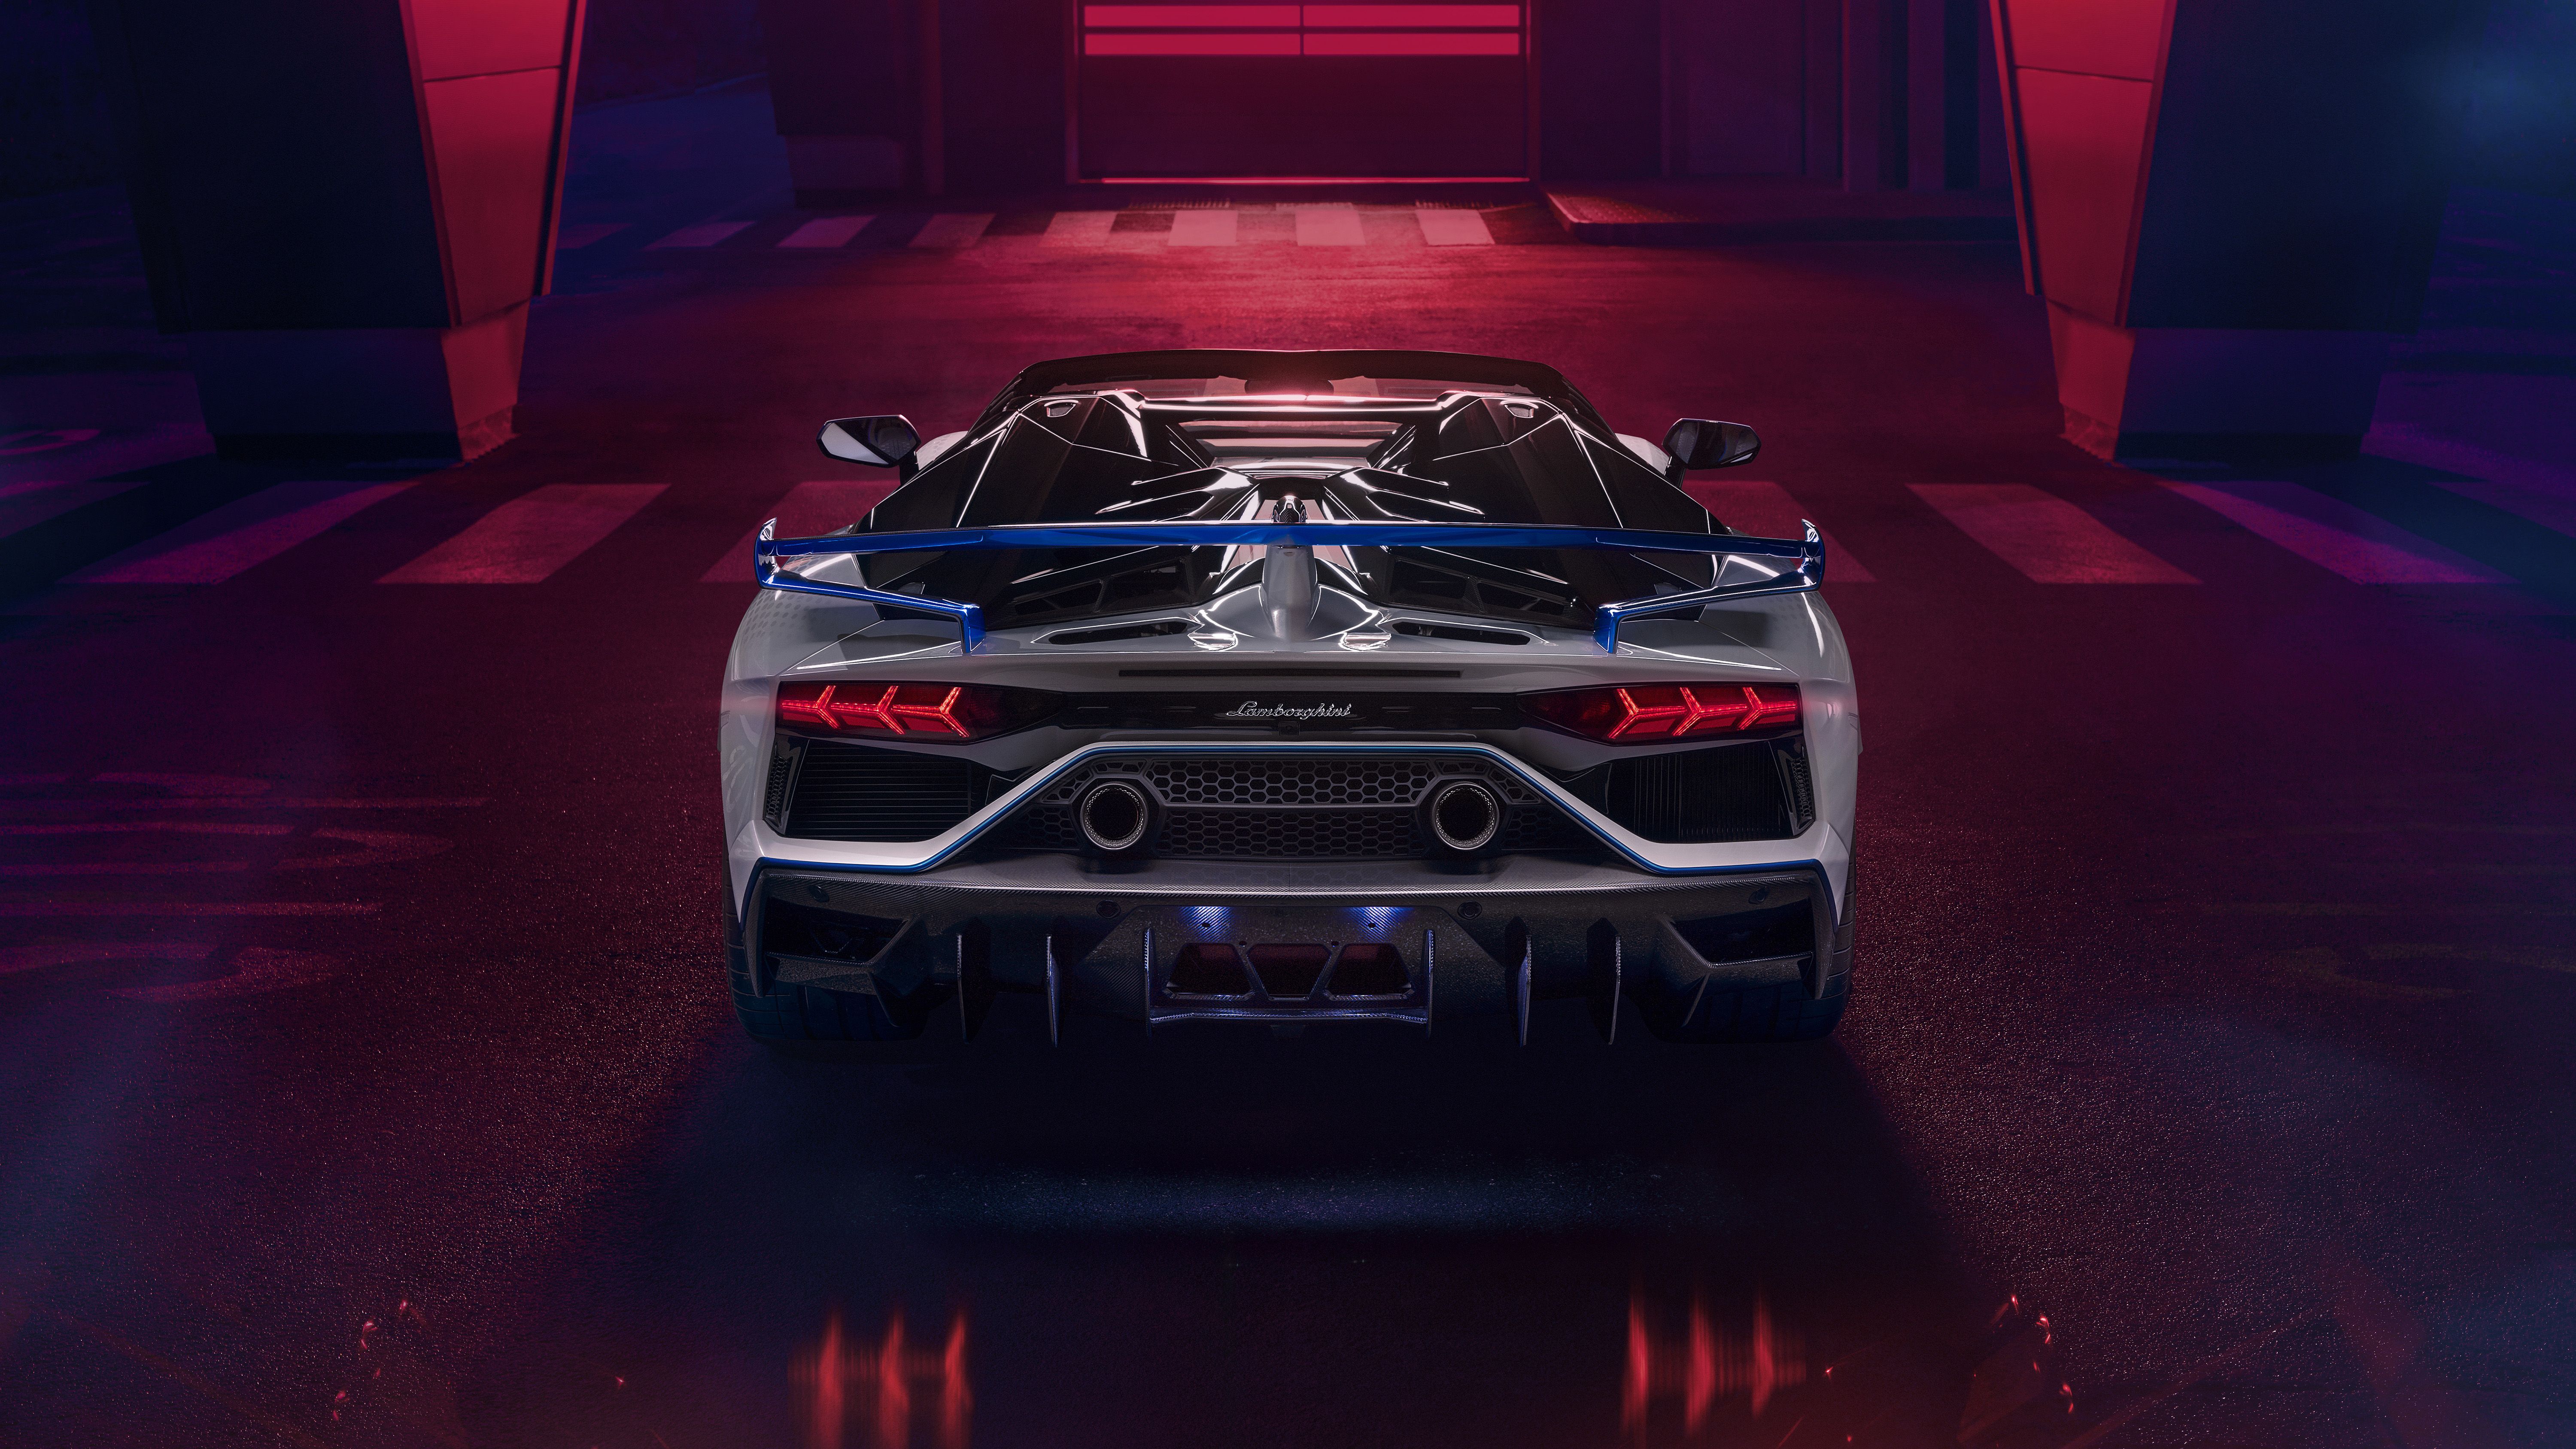 Lamborghini Aventador SVJ Xago Roadster 2020 5K 5 Wallpaper. HD